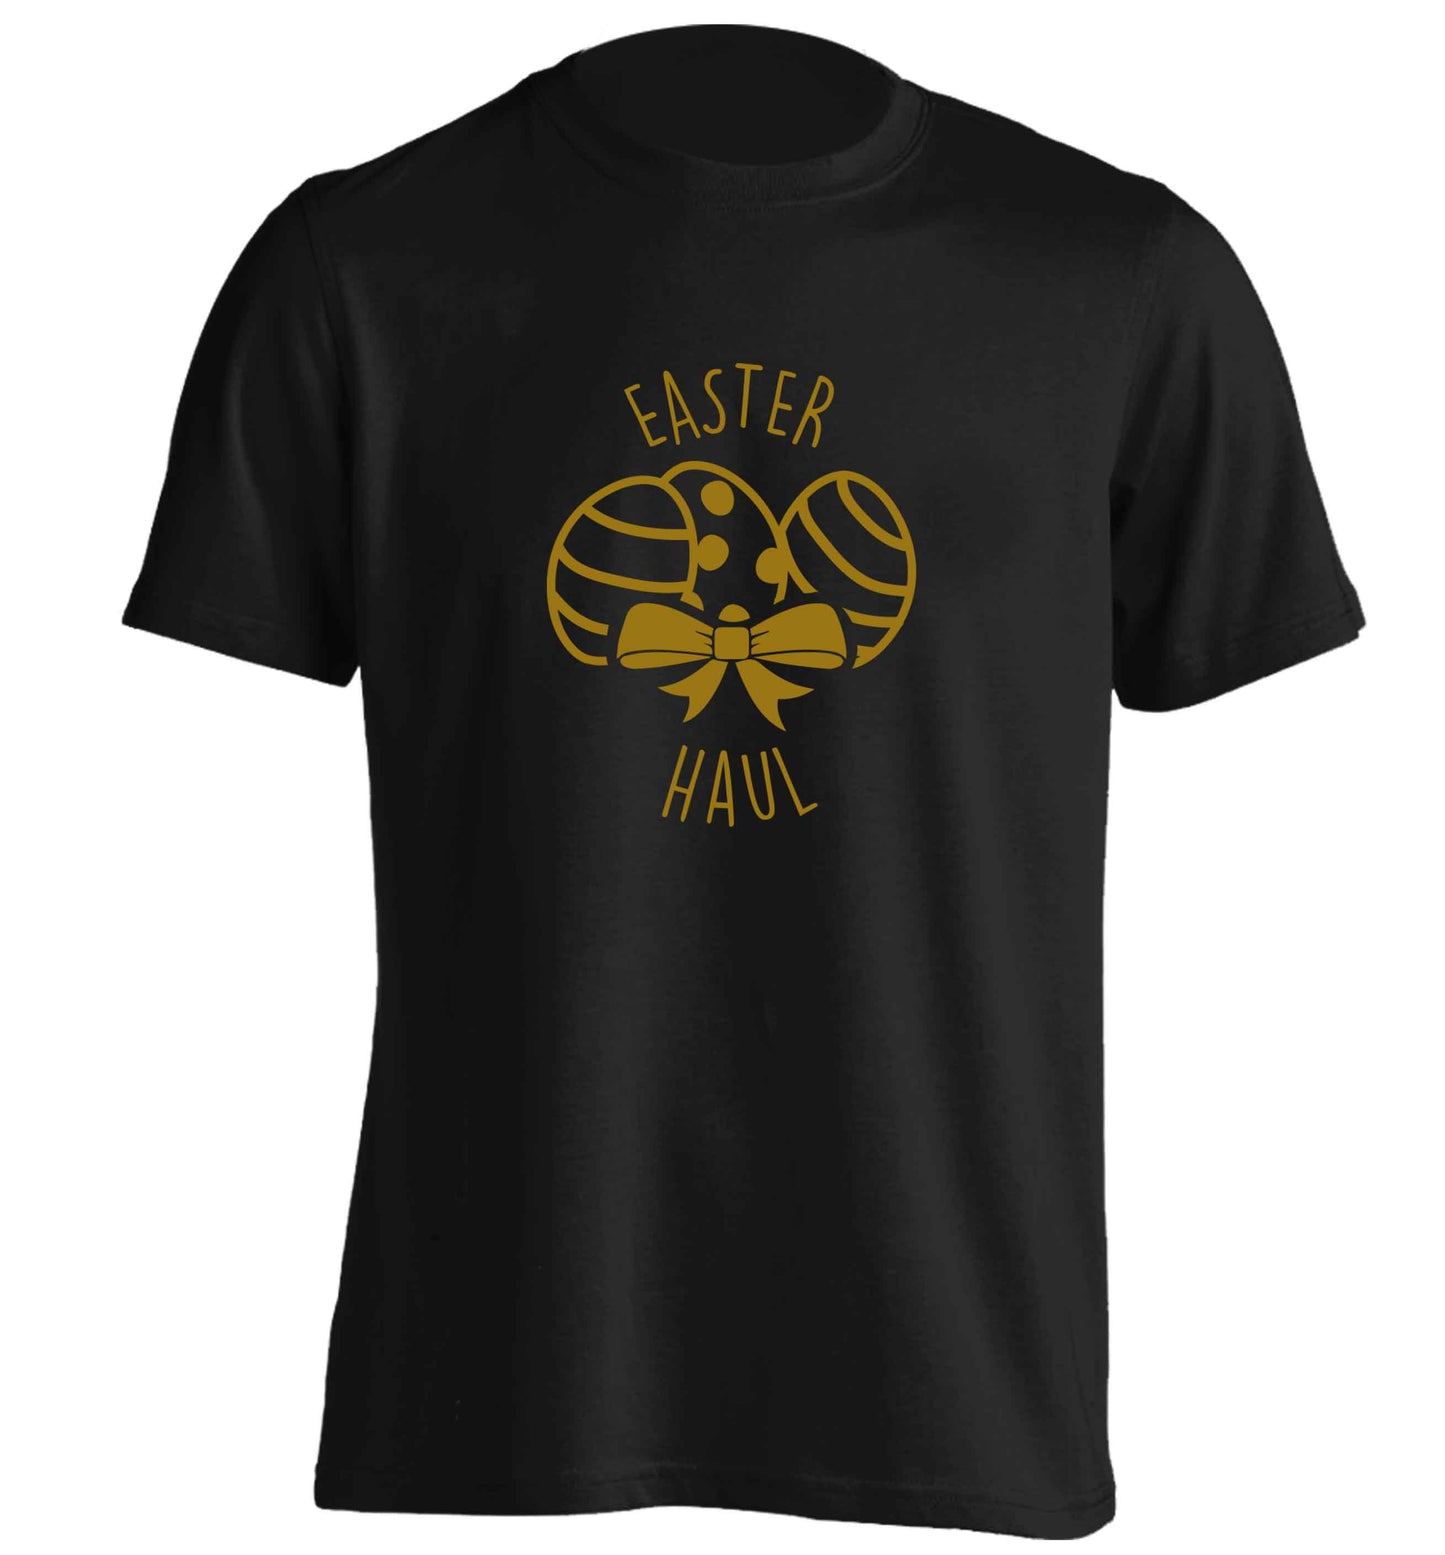 Easter haul adults unisex black Tshirt 2XL